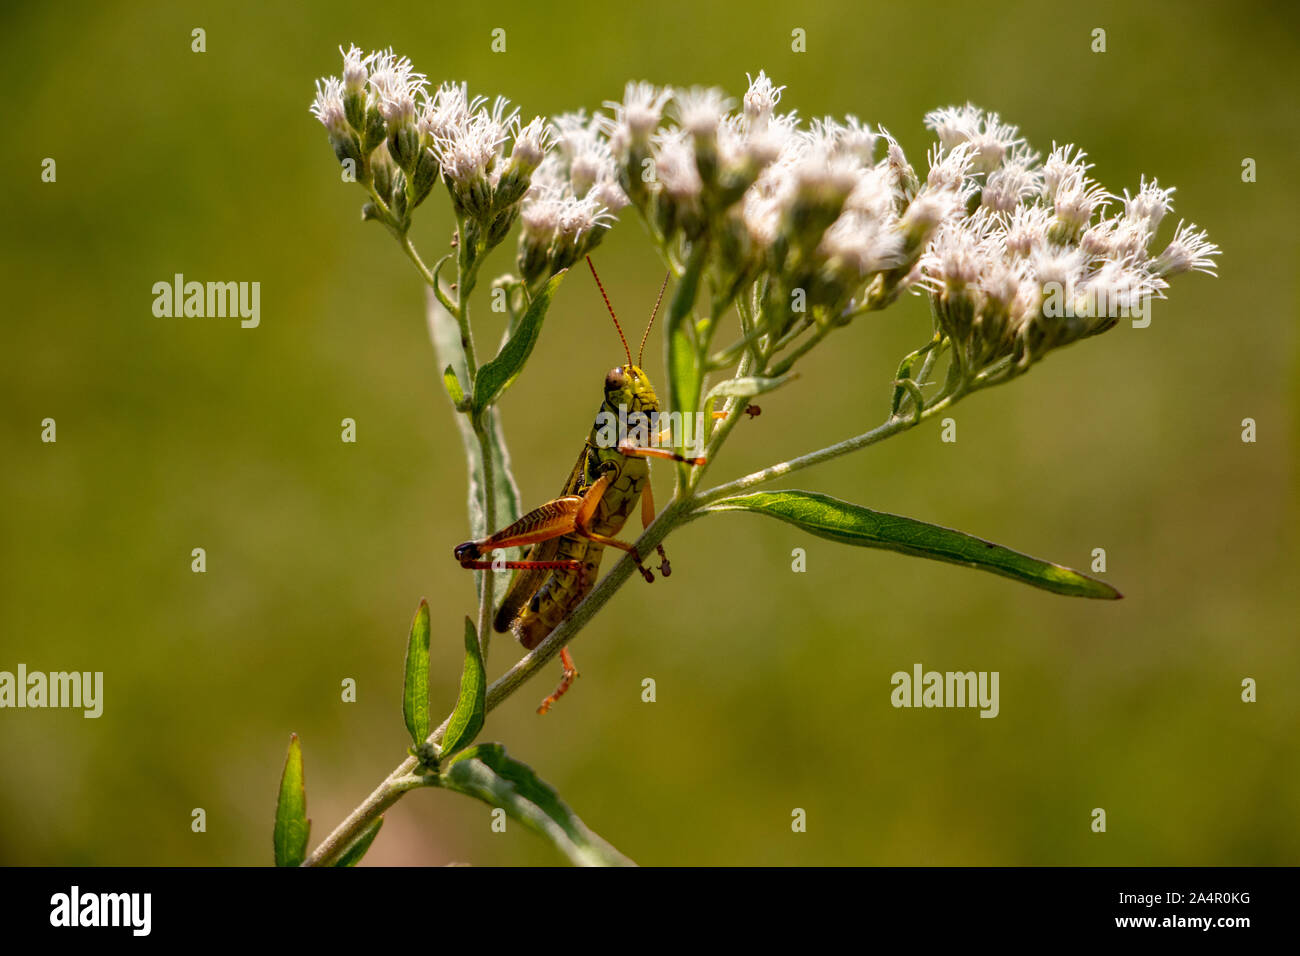 Grasshopper relajándose en una flor Foto de stock